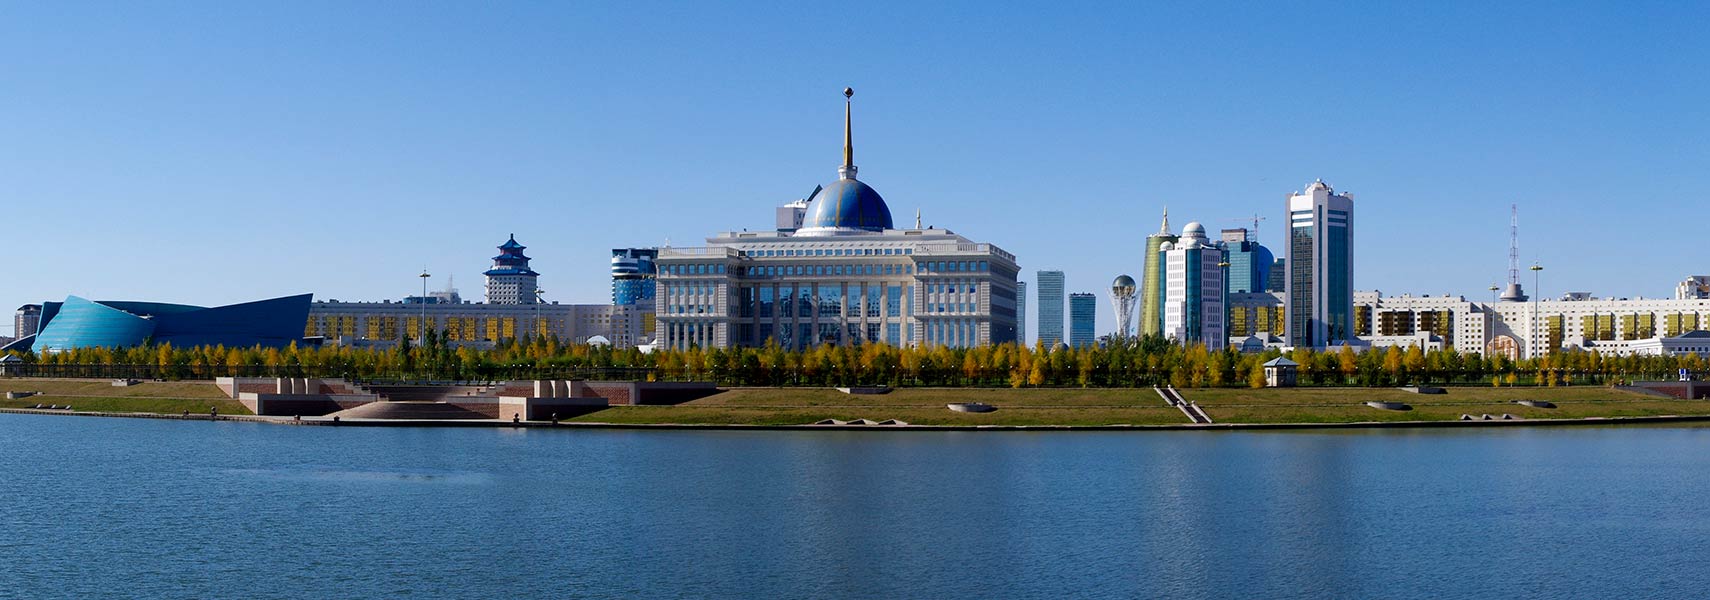 Kazakhstan government headquarters in Astana